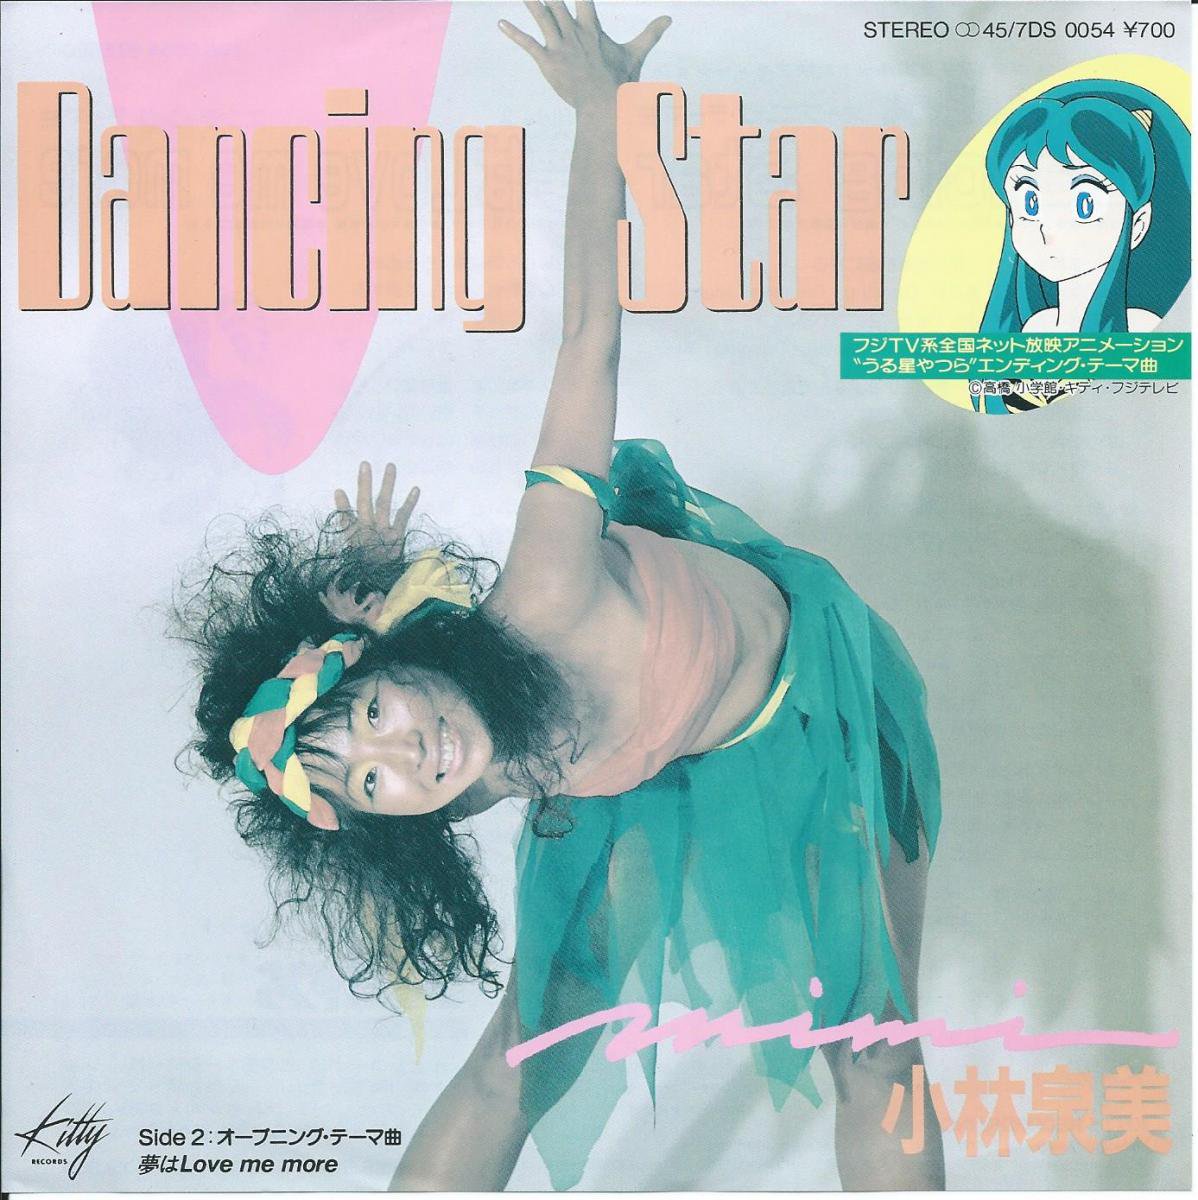  MIMI / DANCING STAR / ̴LOVE ME MORE (Ĥ) (7